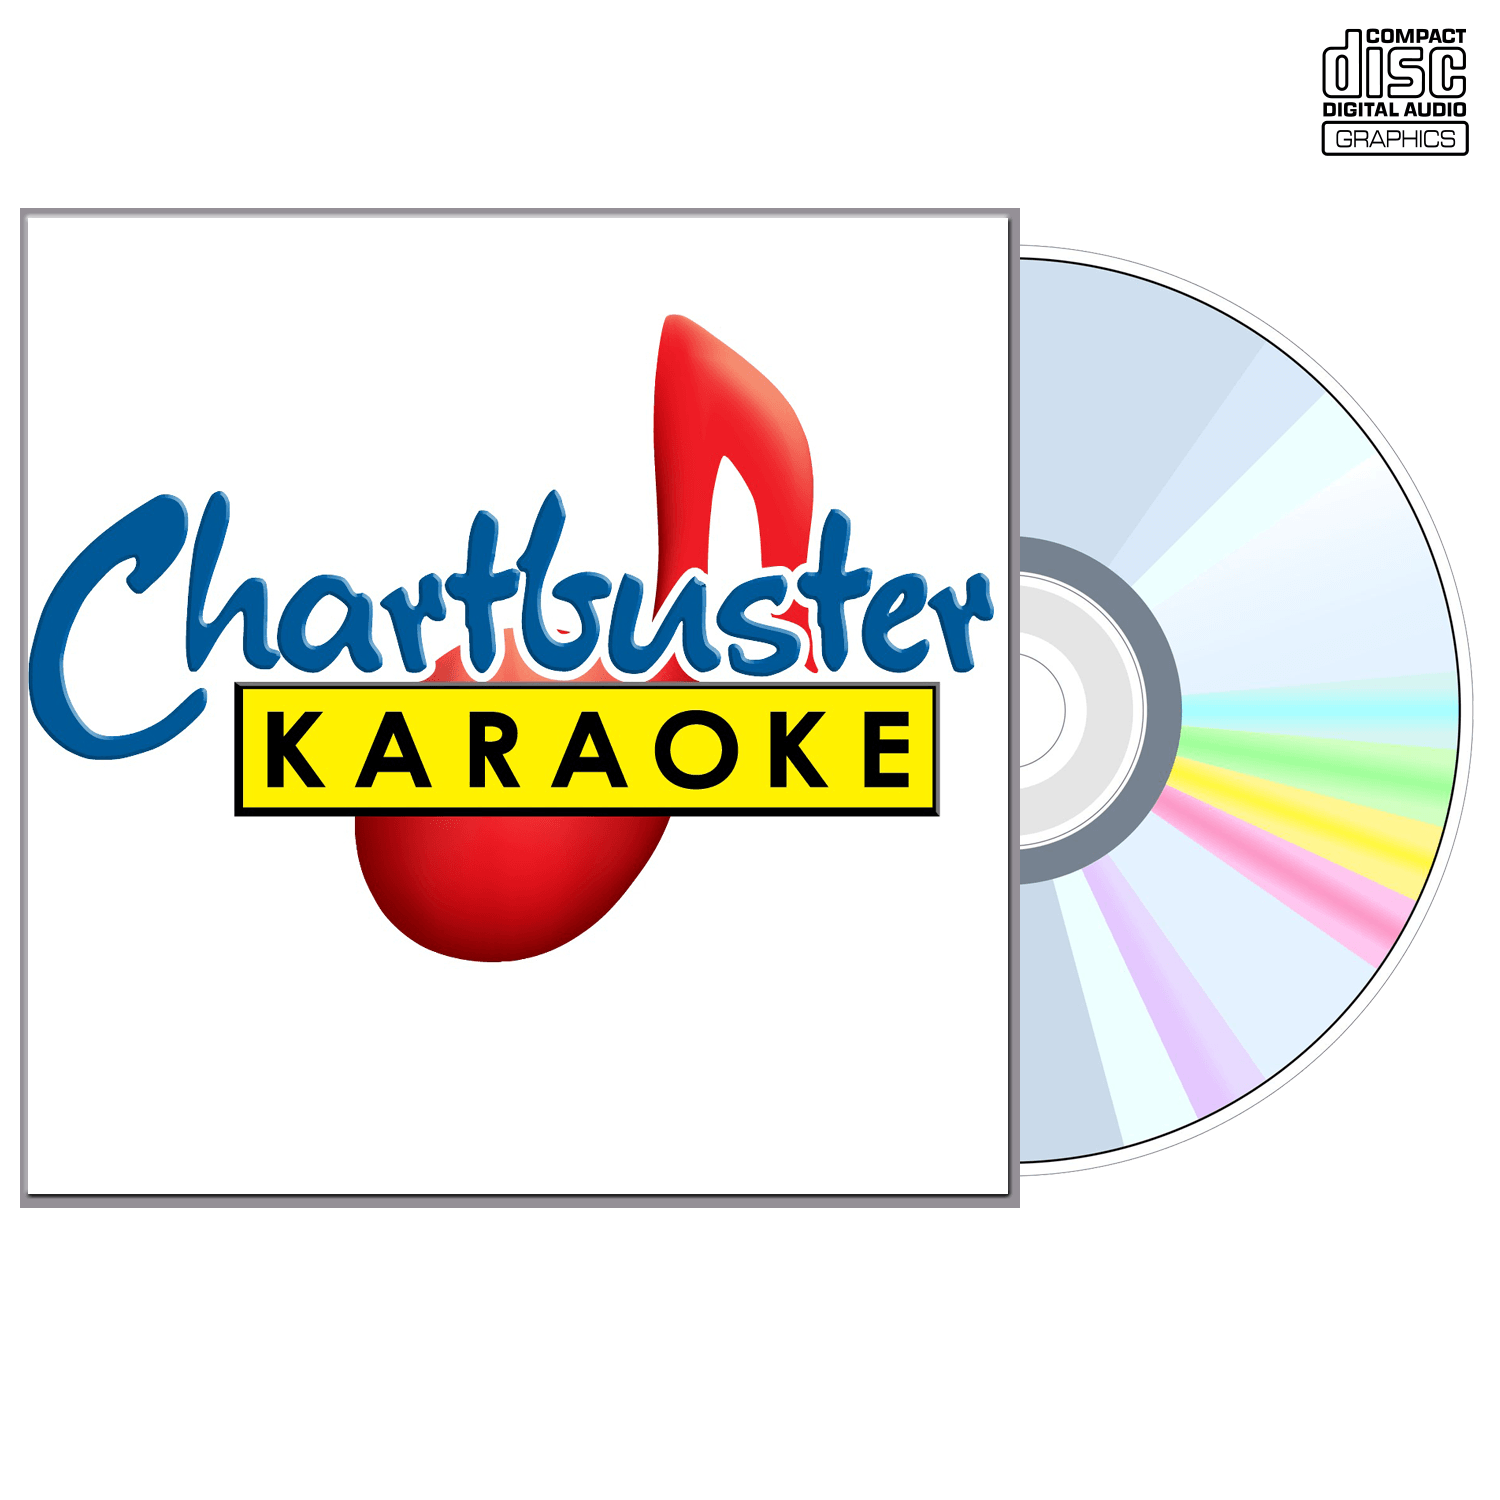 Alan Jackson Vol 5 - CD+G - Chartbuster Karaoke - Karaoke Home Entertainment